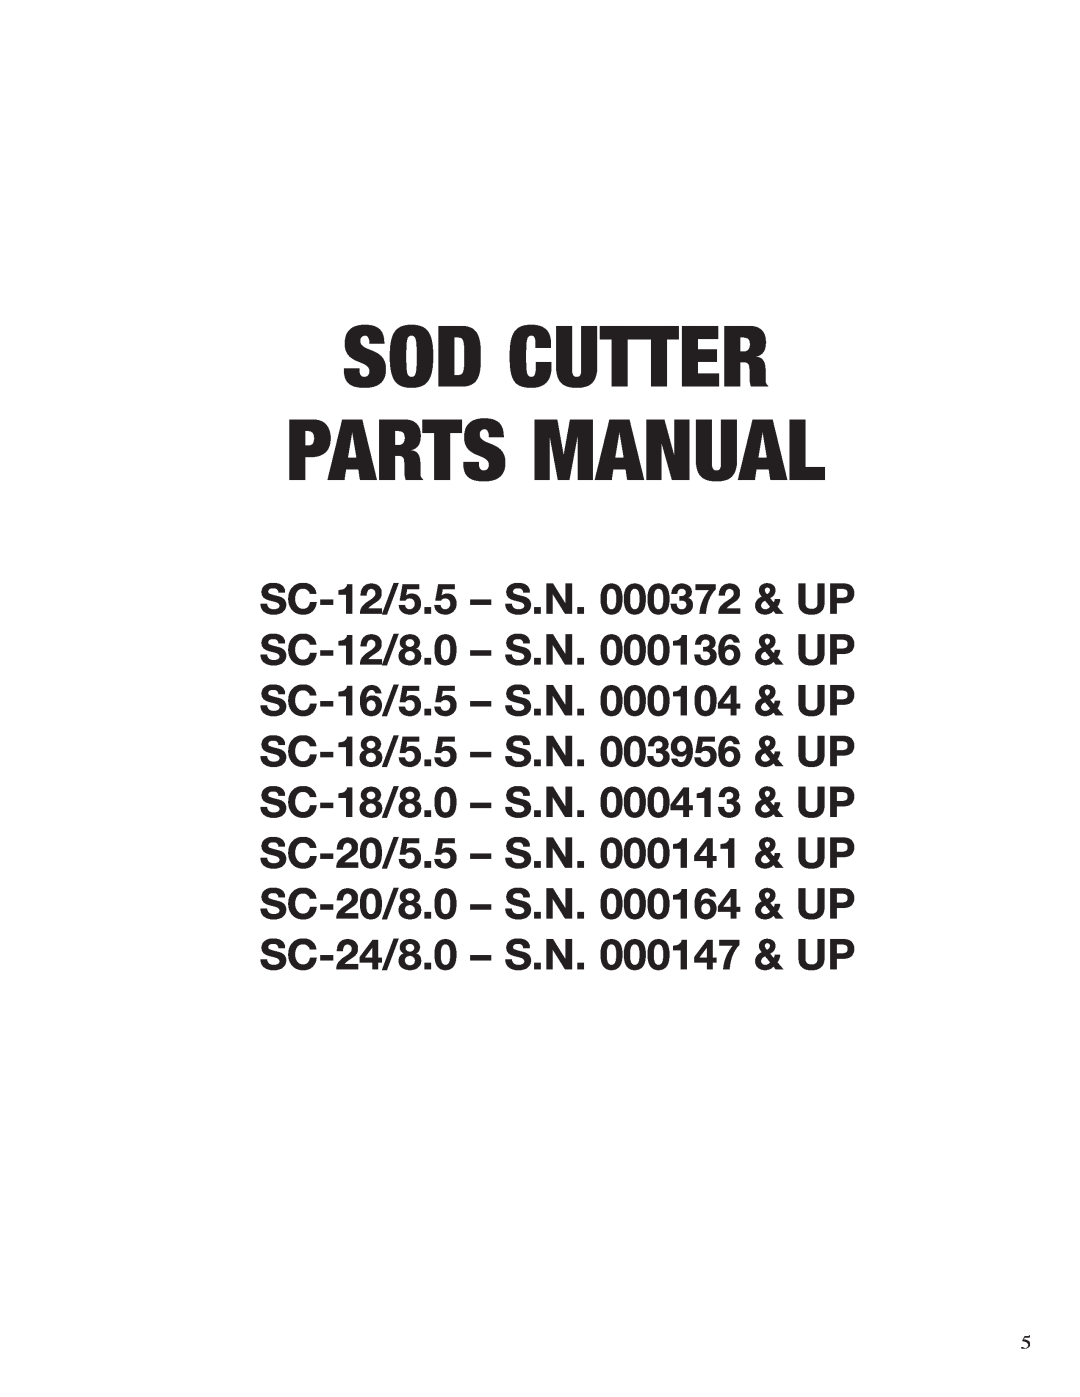 Classen SC-16, SC-24, SC-20, SC-12, SC-18 manual Sod Cutter Parts Manual 